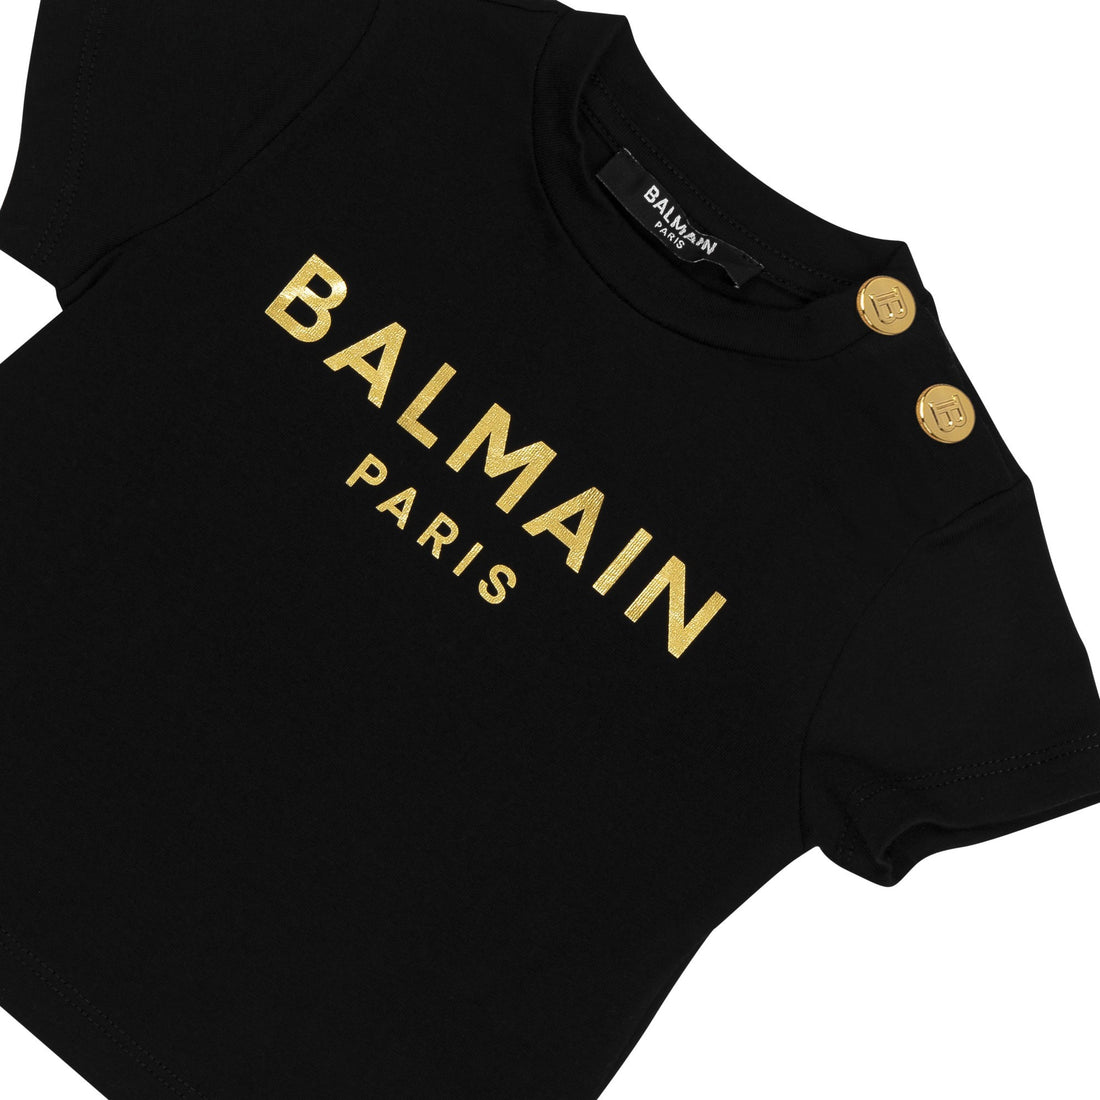 Balmain T-Shirt/Top Style: Bs8011930Or